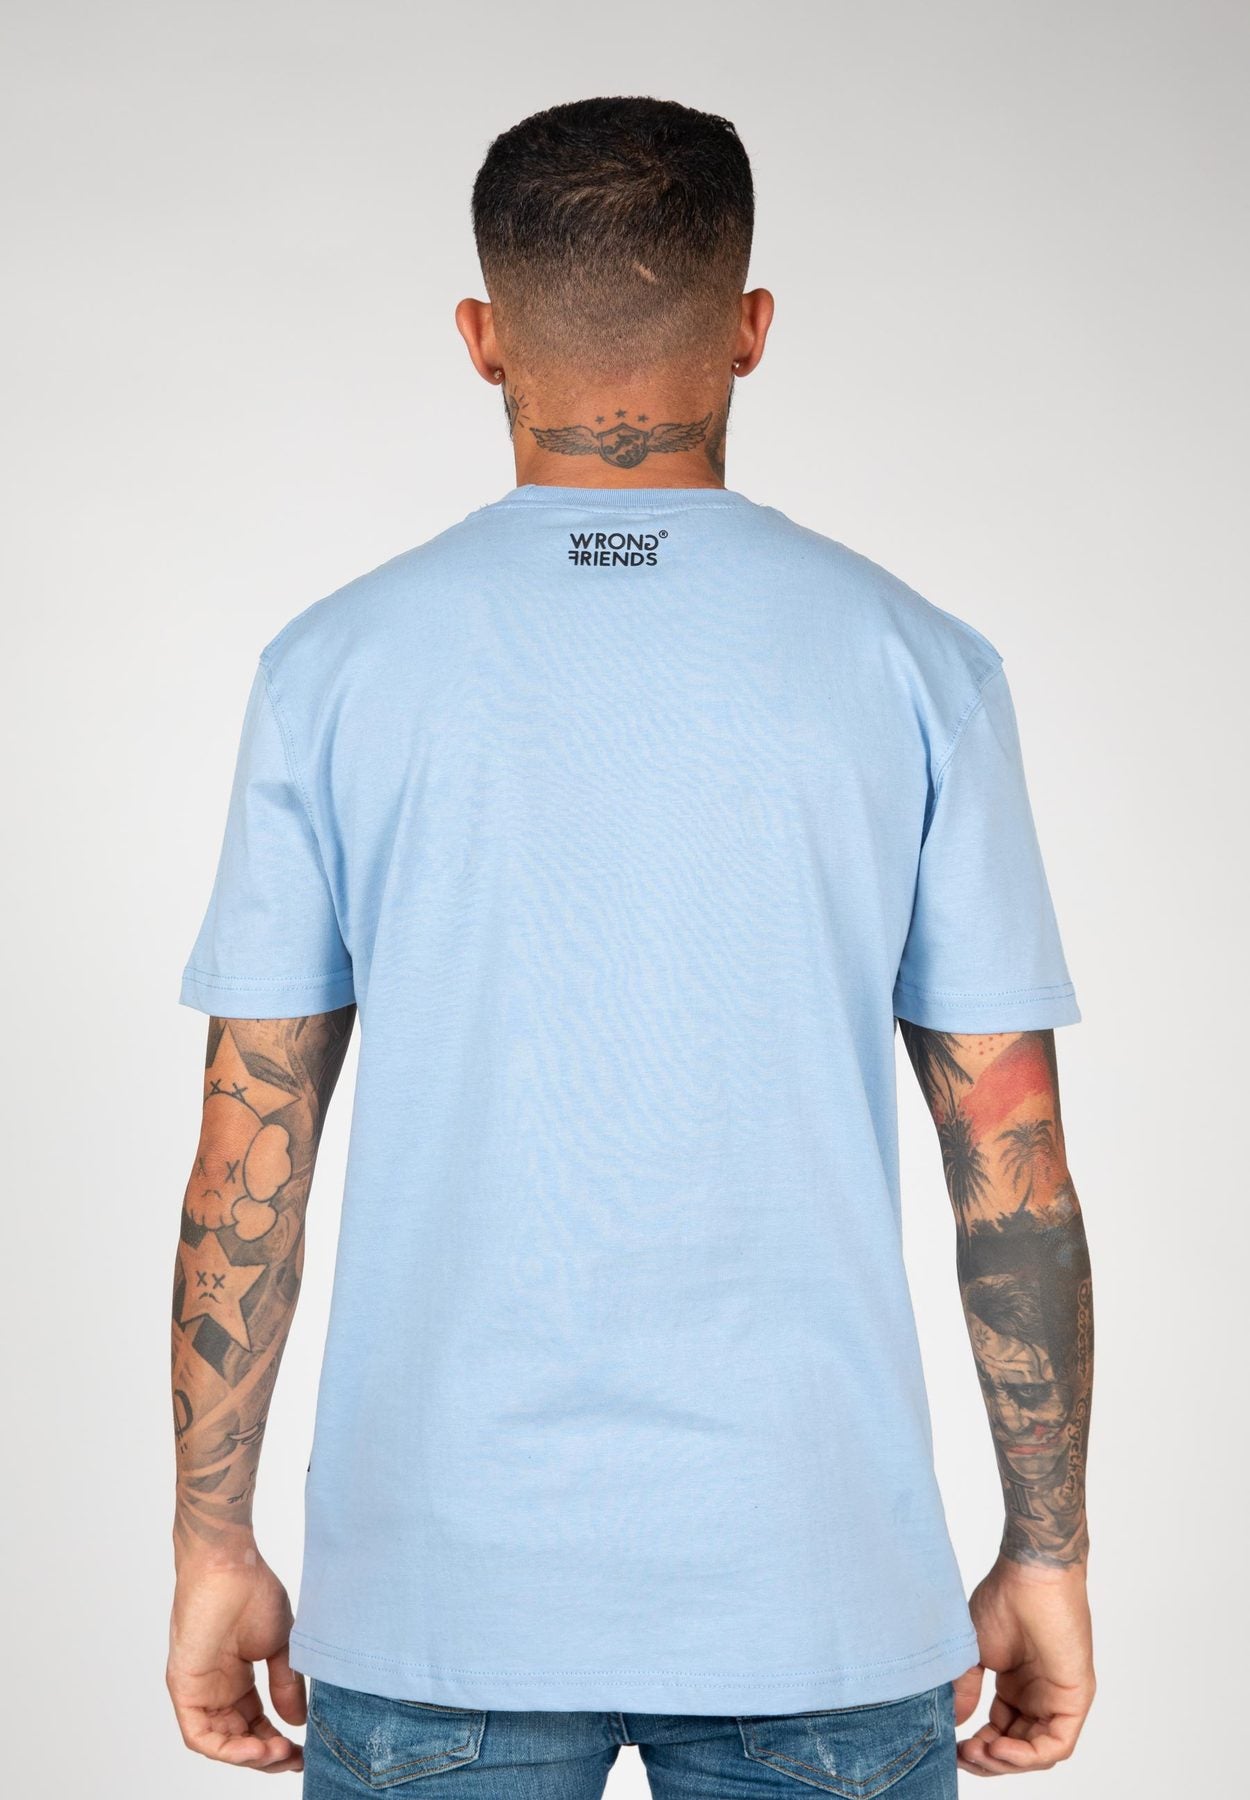 Fast Life T-shirt Blue